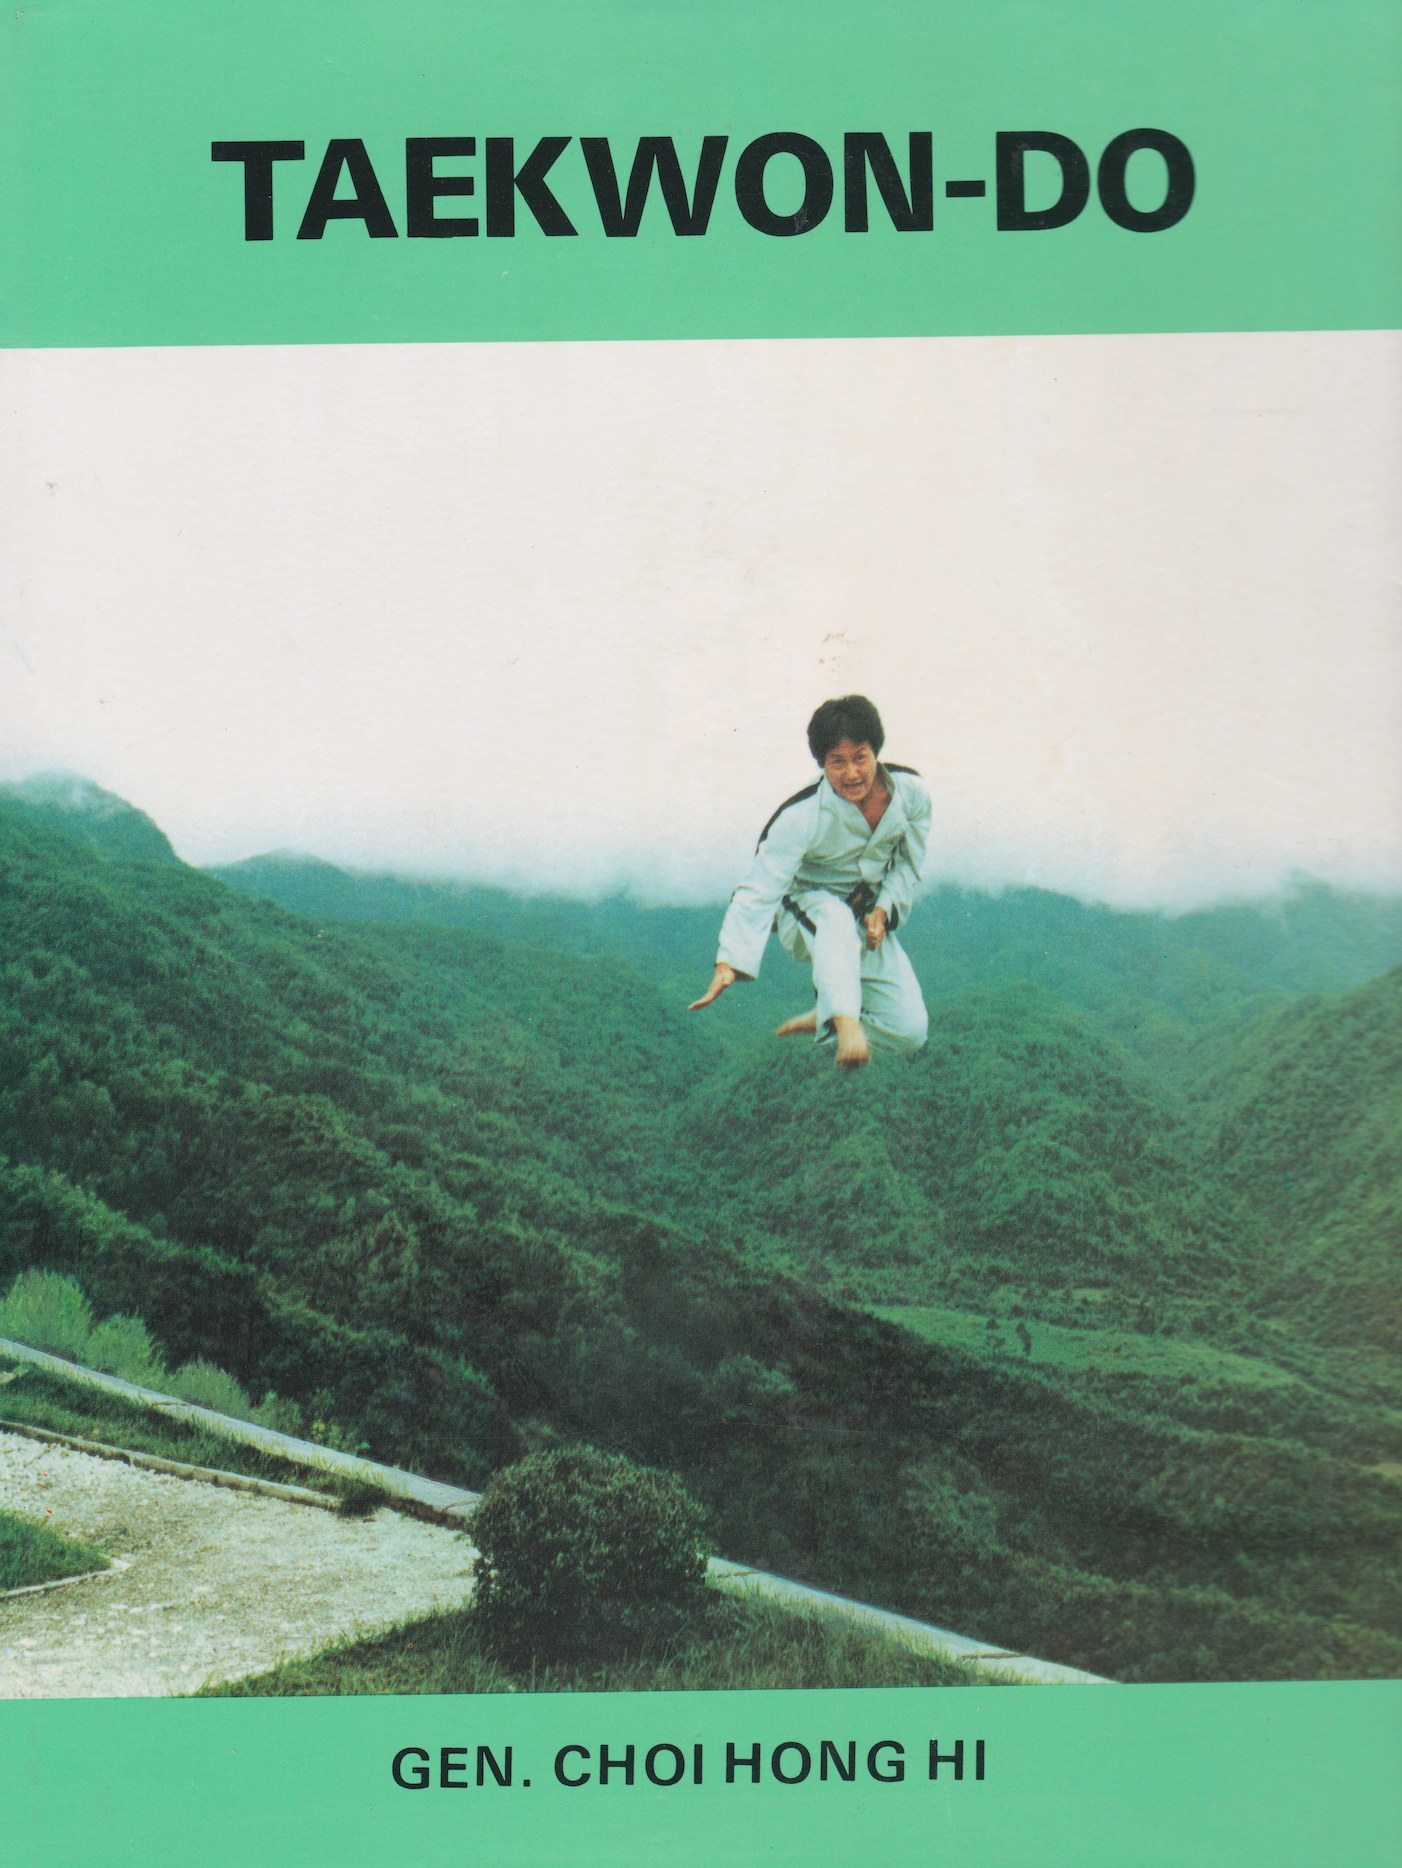 TAEKWONDO The Art of Self Defence Book by Choi Hong Hi (Hardcover) 3rd Ed (Preowned)